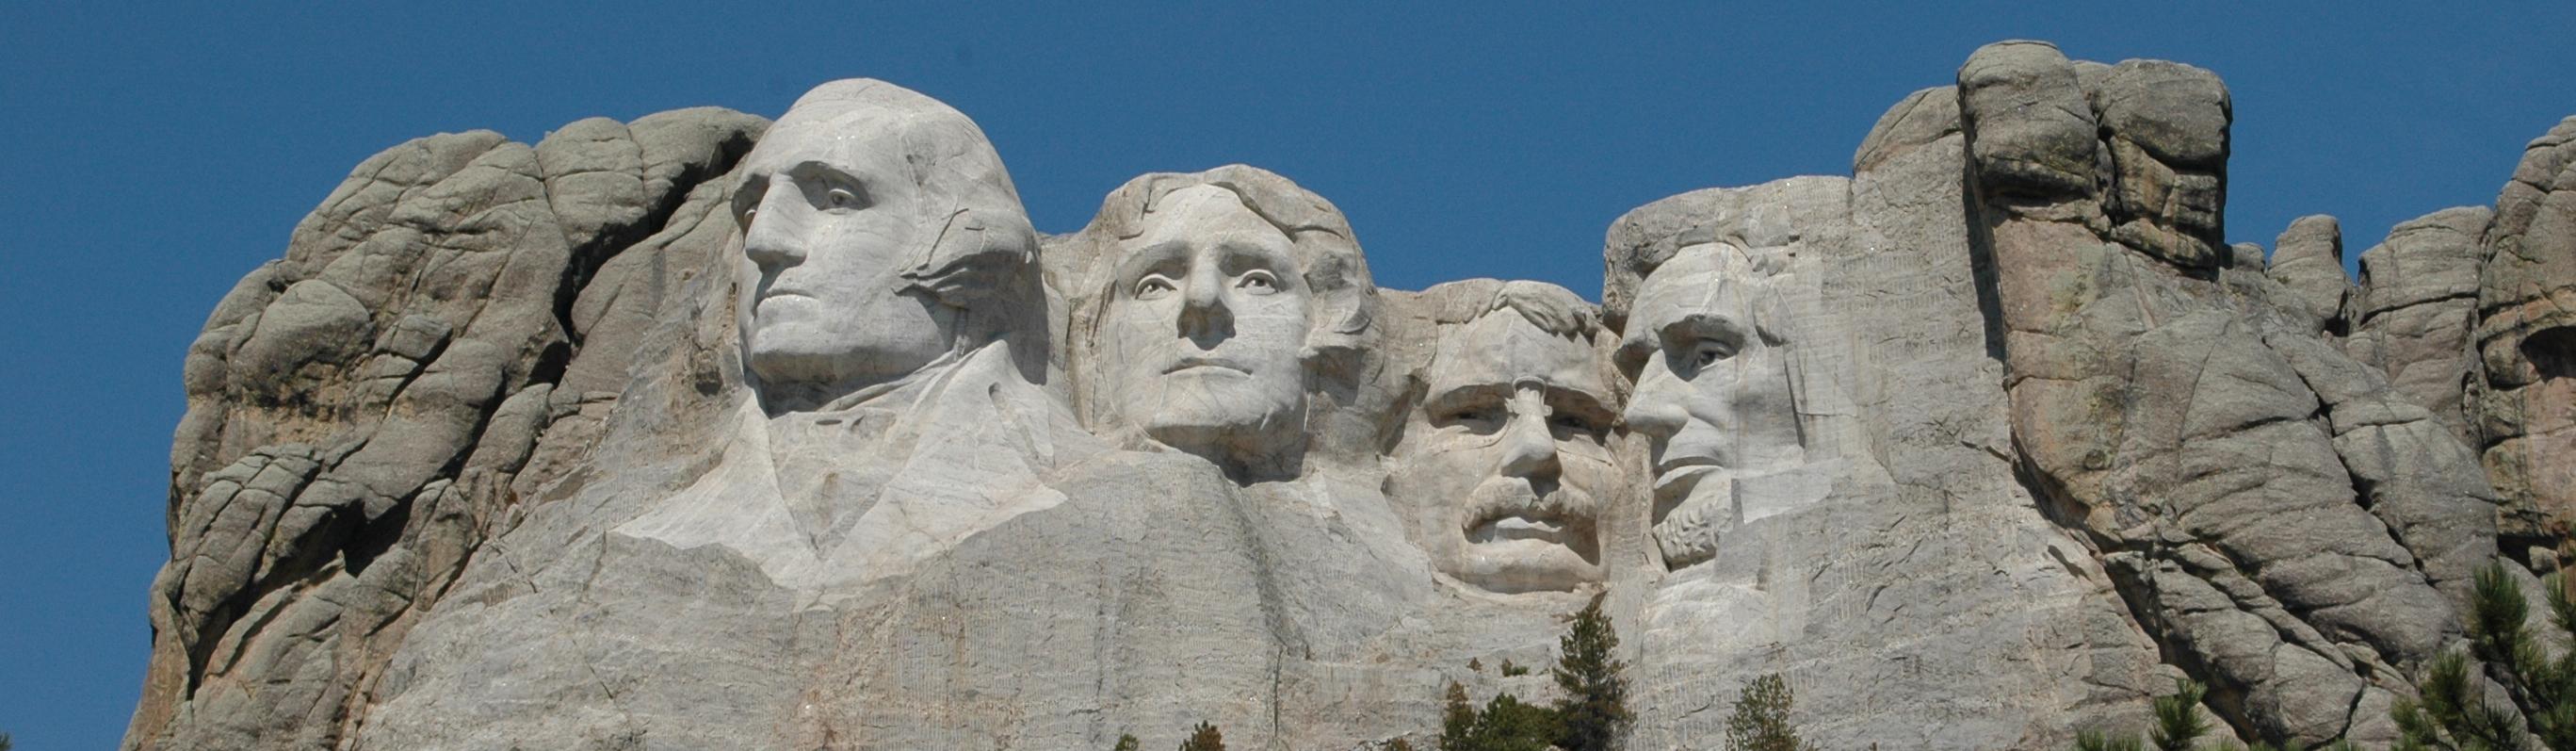 Mount Rushmore National Memorial (U.S. National Park Service)